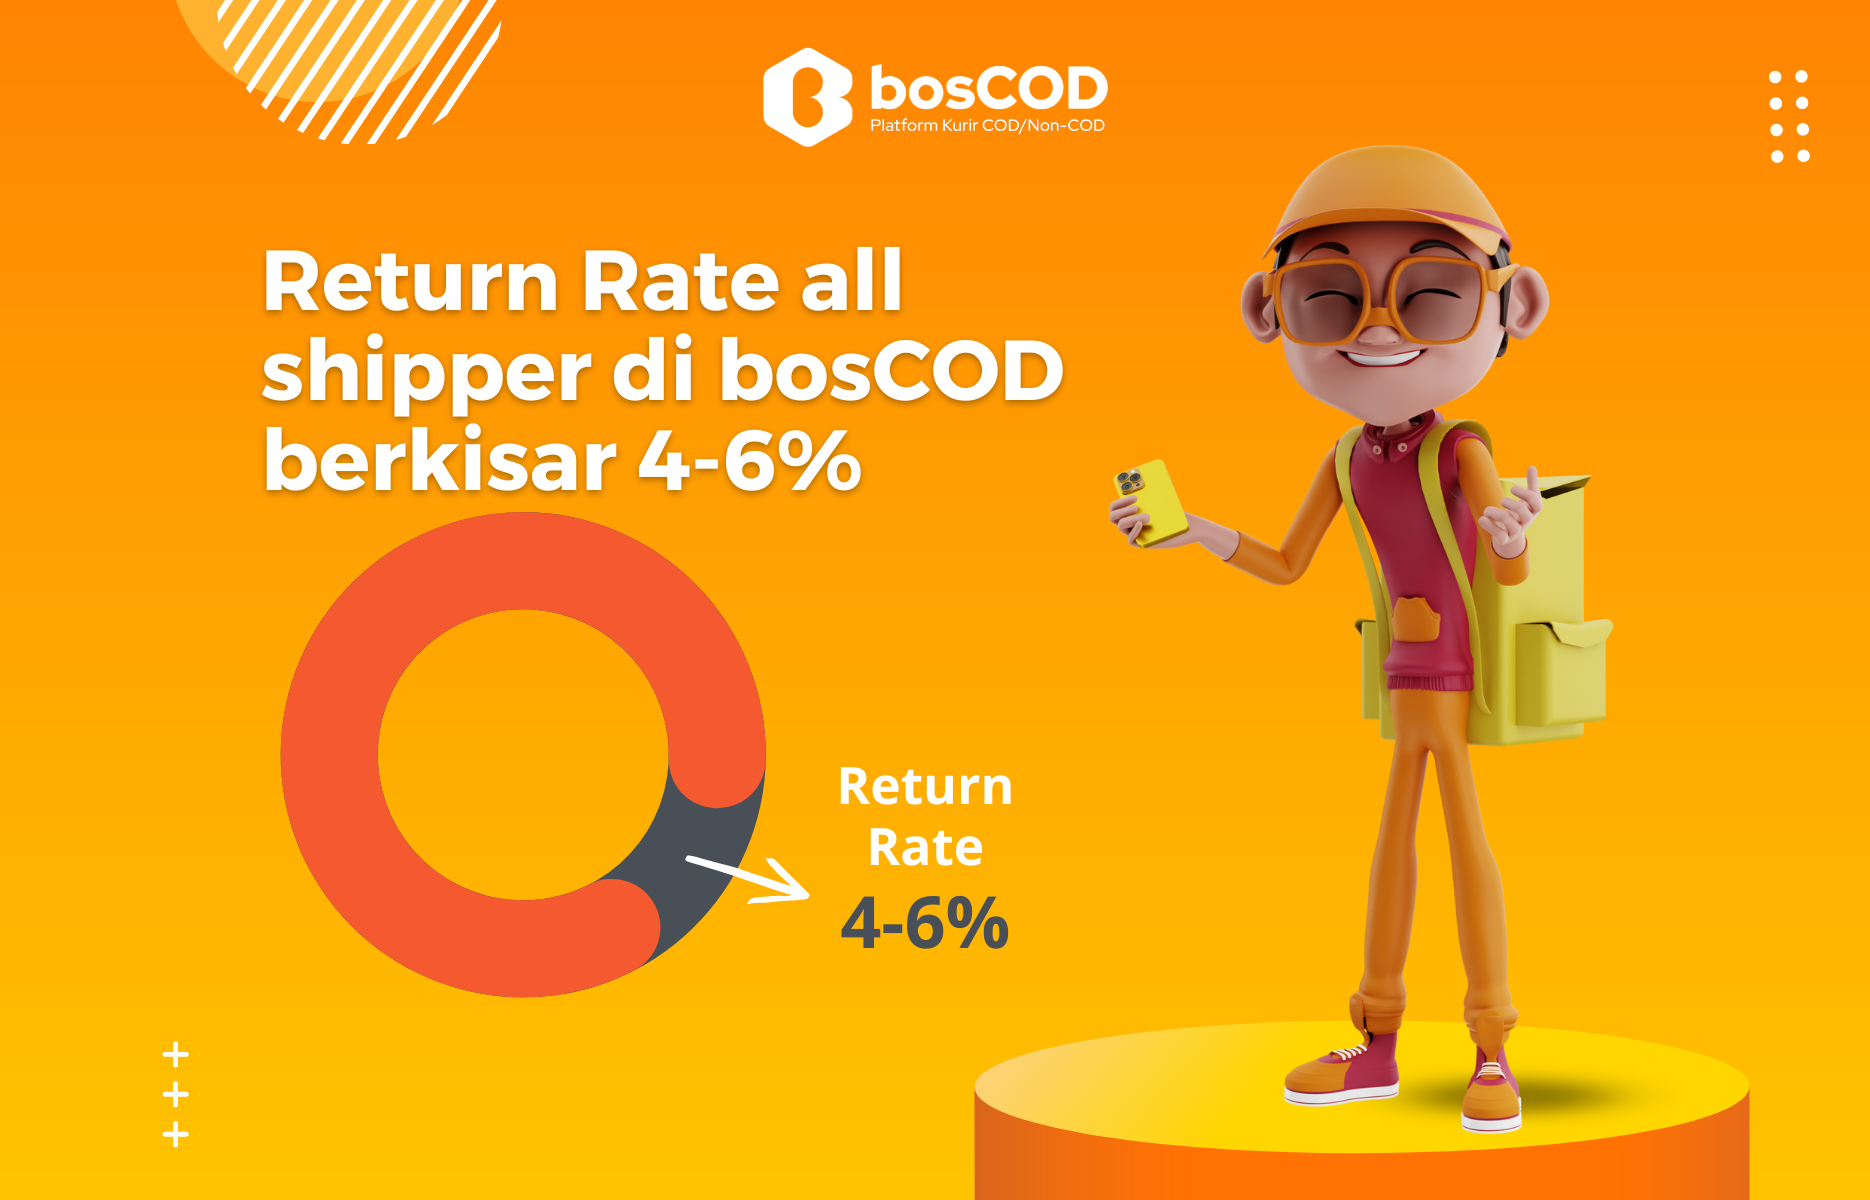 Return rate all shipper di BosCOD berkisar 4-6%